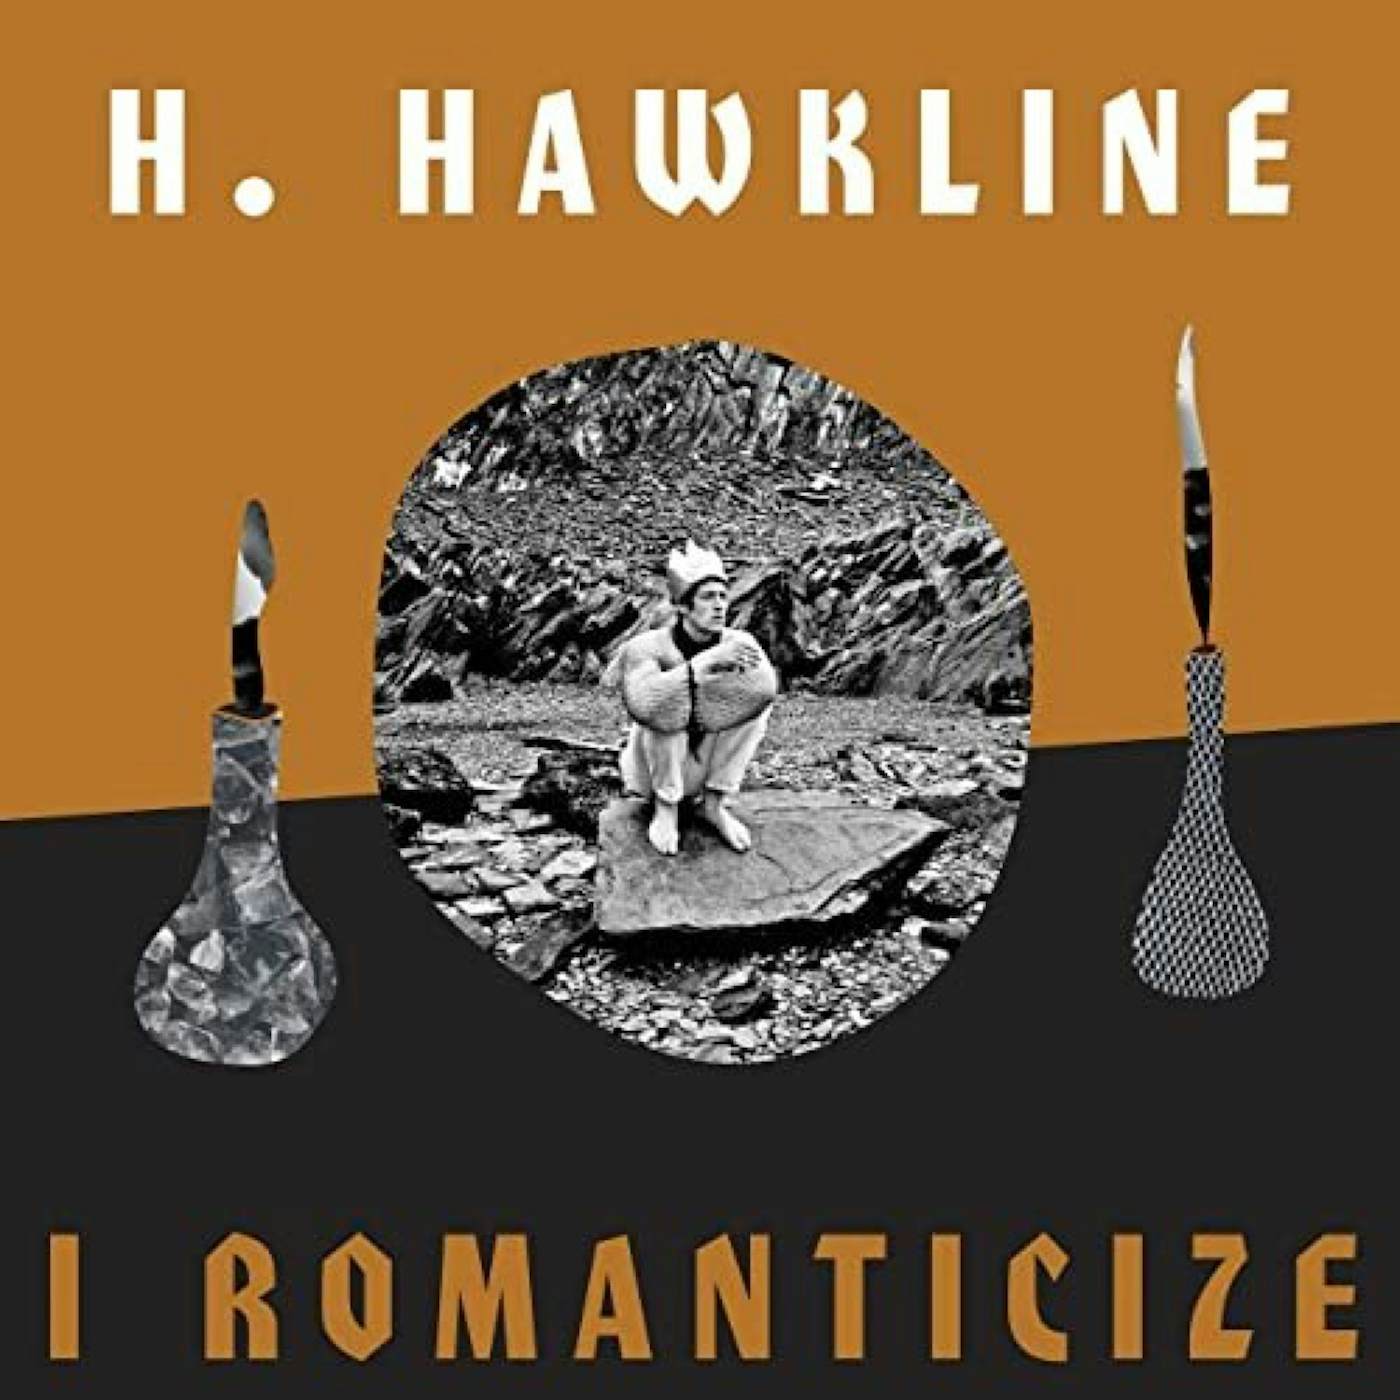 H. Hawkline I Romanticize Vinyl Record